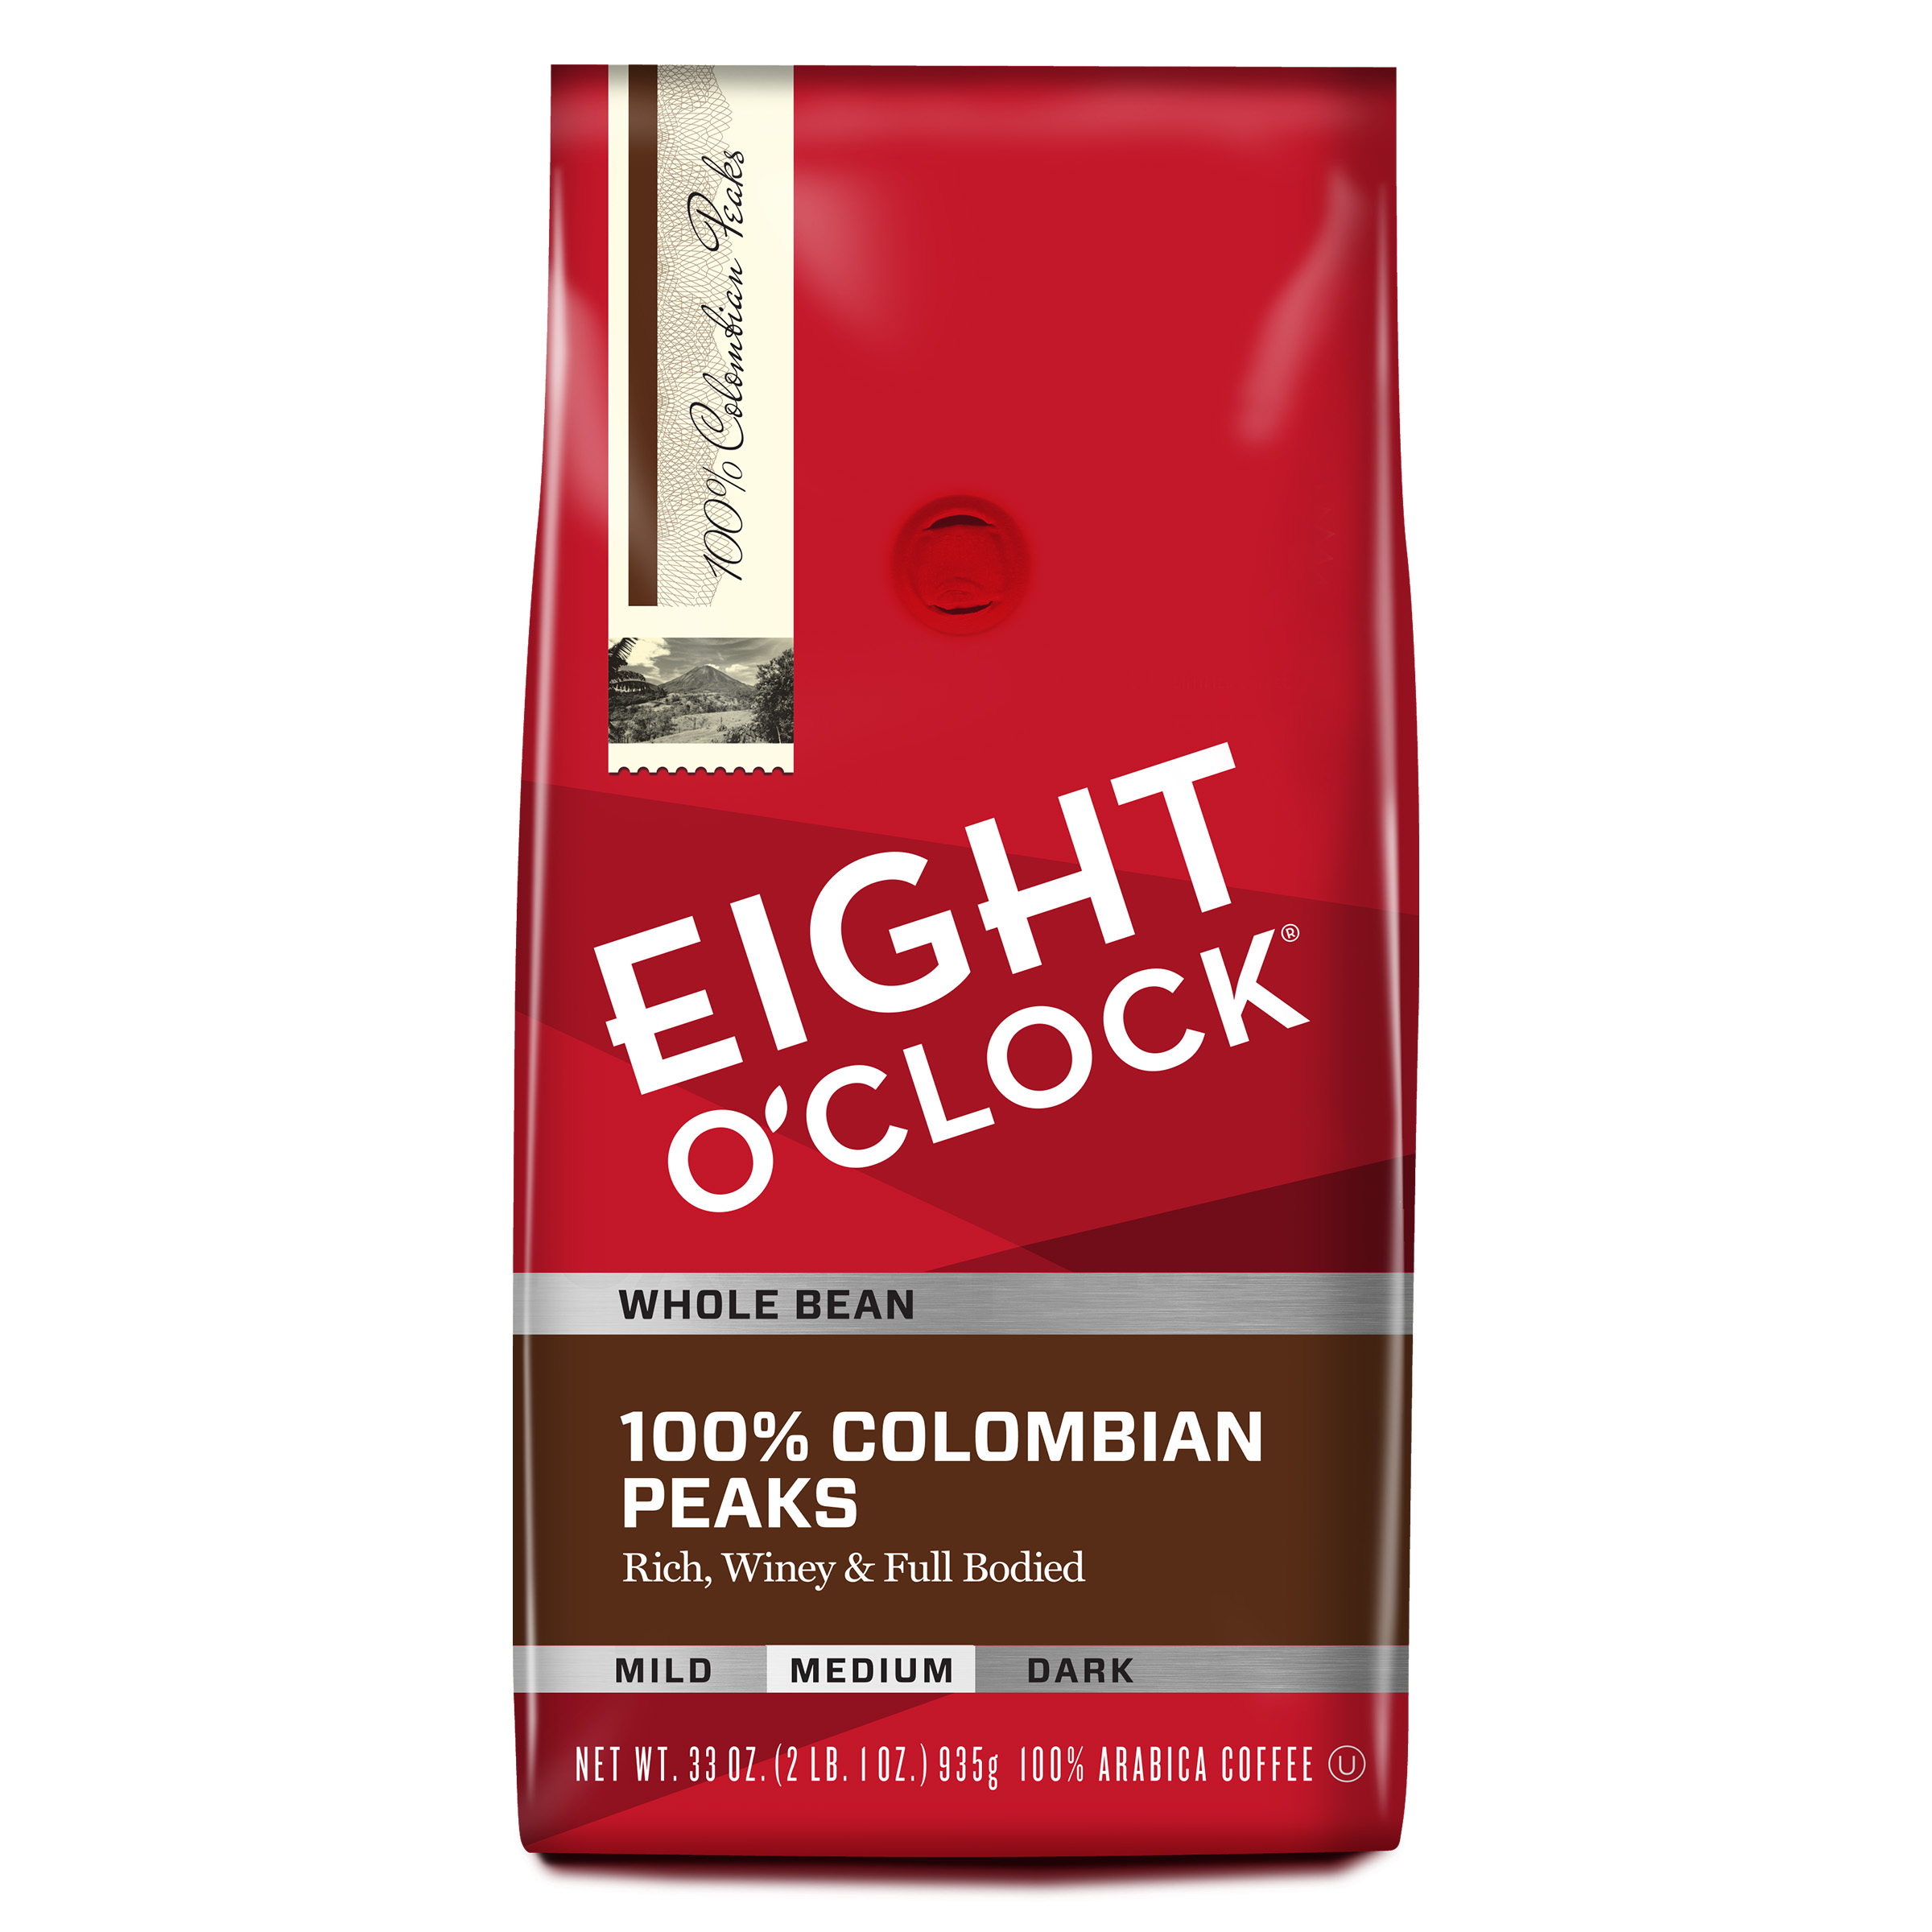 Eight O'Clock, 100% Colombian Peaks Coffee, Medium Roast, Whole Bean Coffee, 33 oz Bag - image 1 of 11